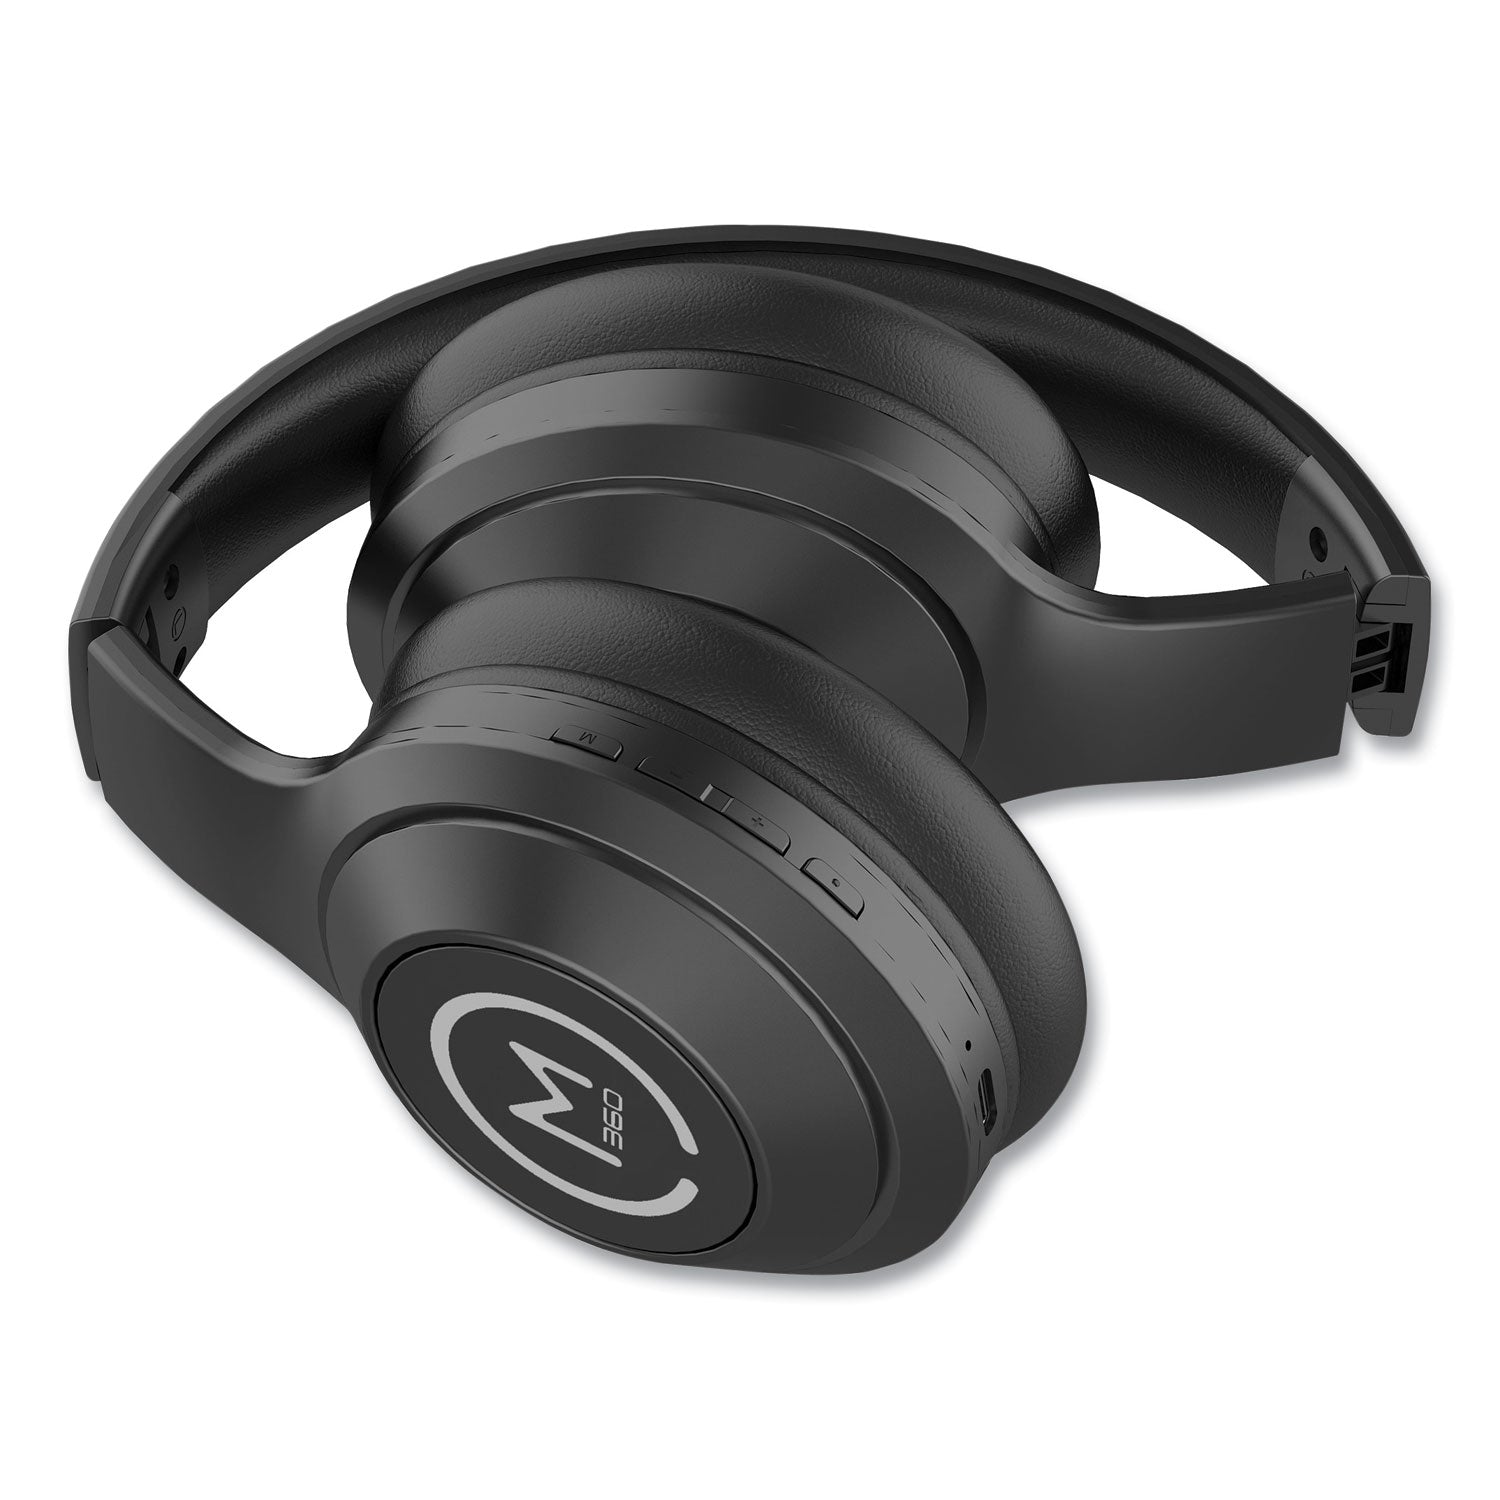 comfort+-wireless-over-ear-headphones-with-microphone-black_mhshp6500b - 2